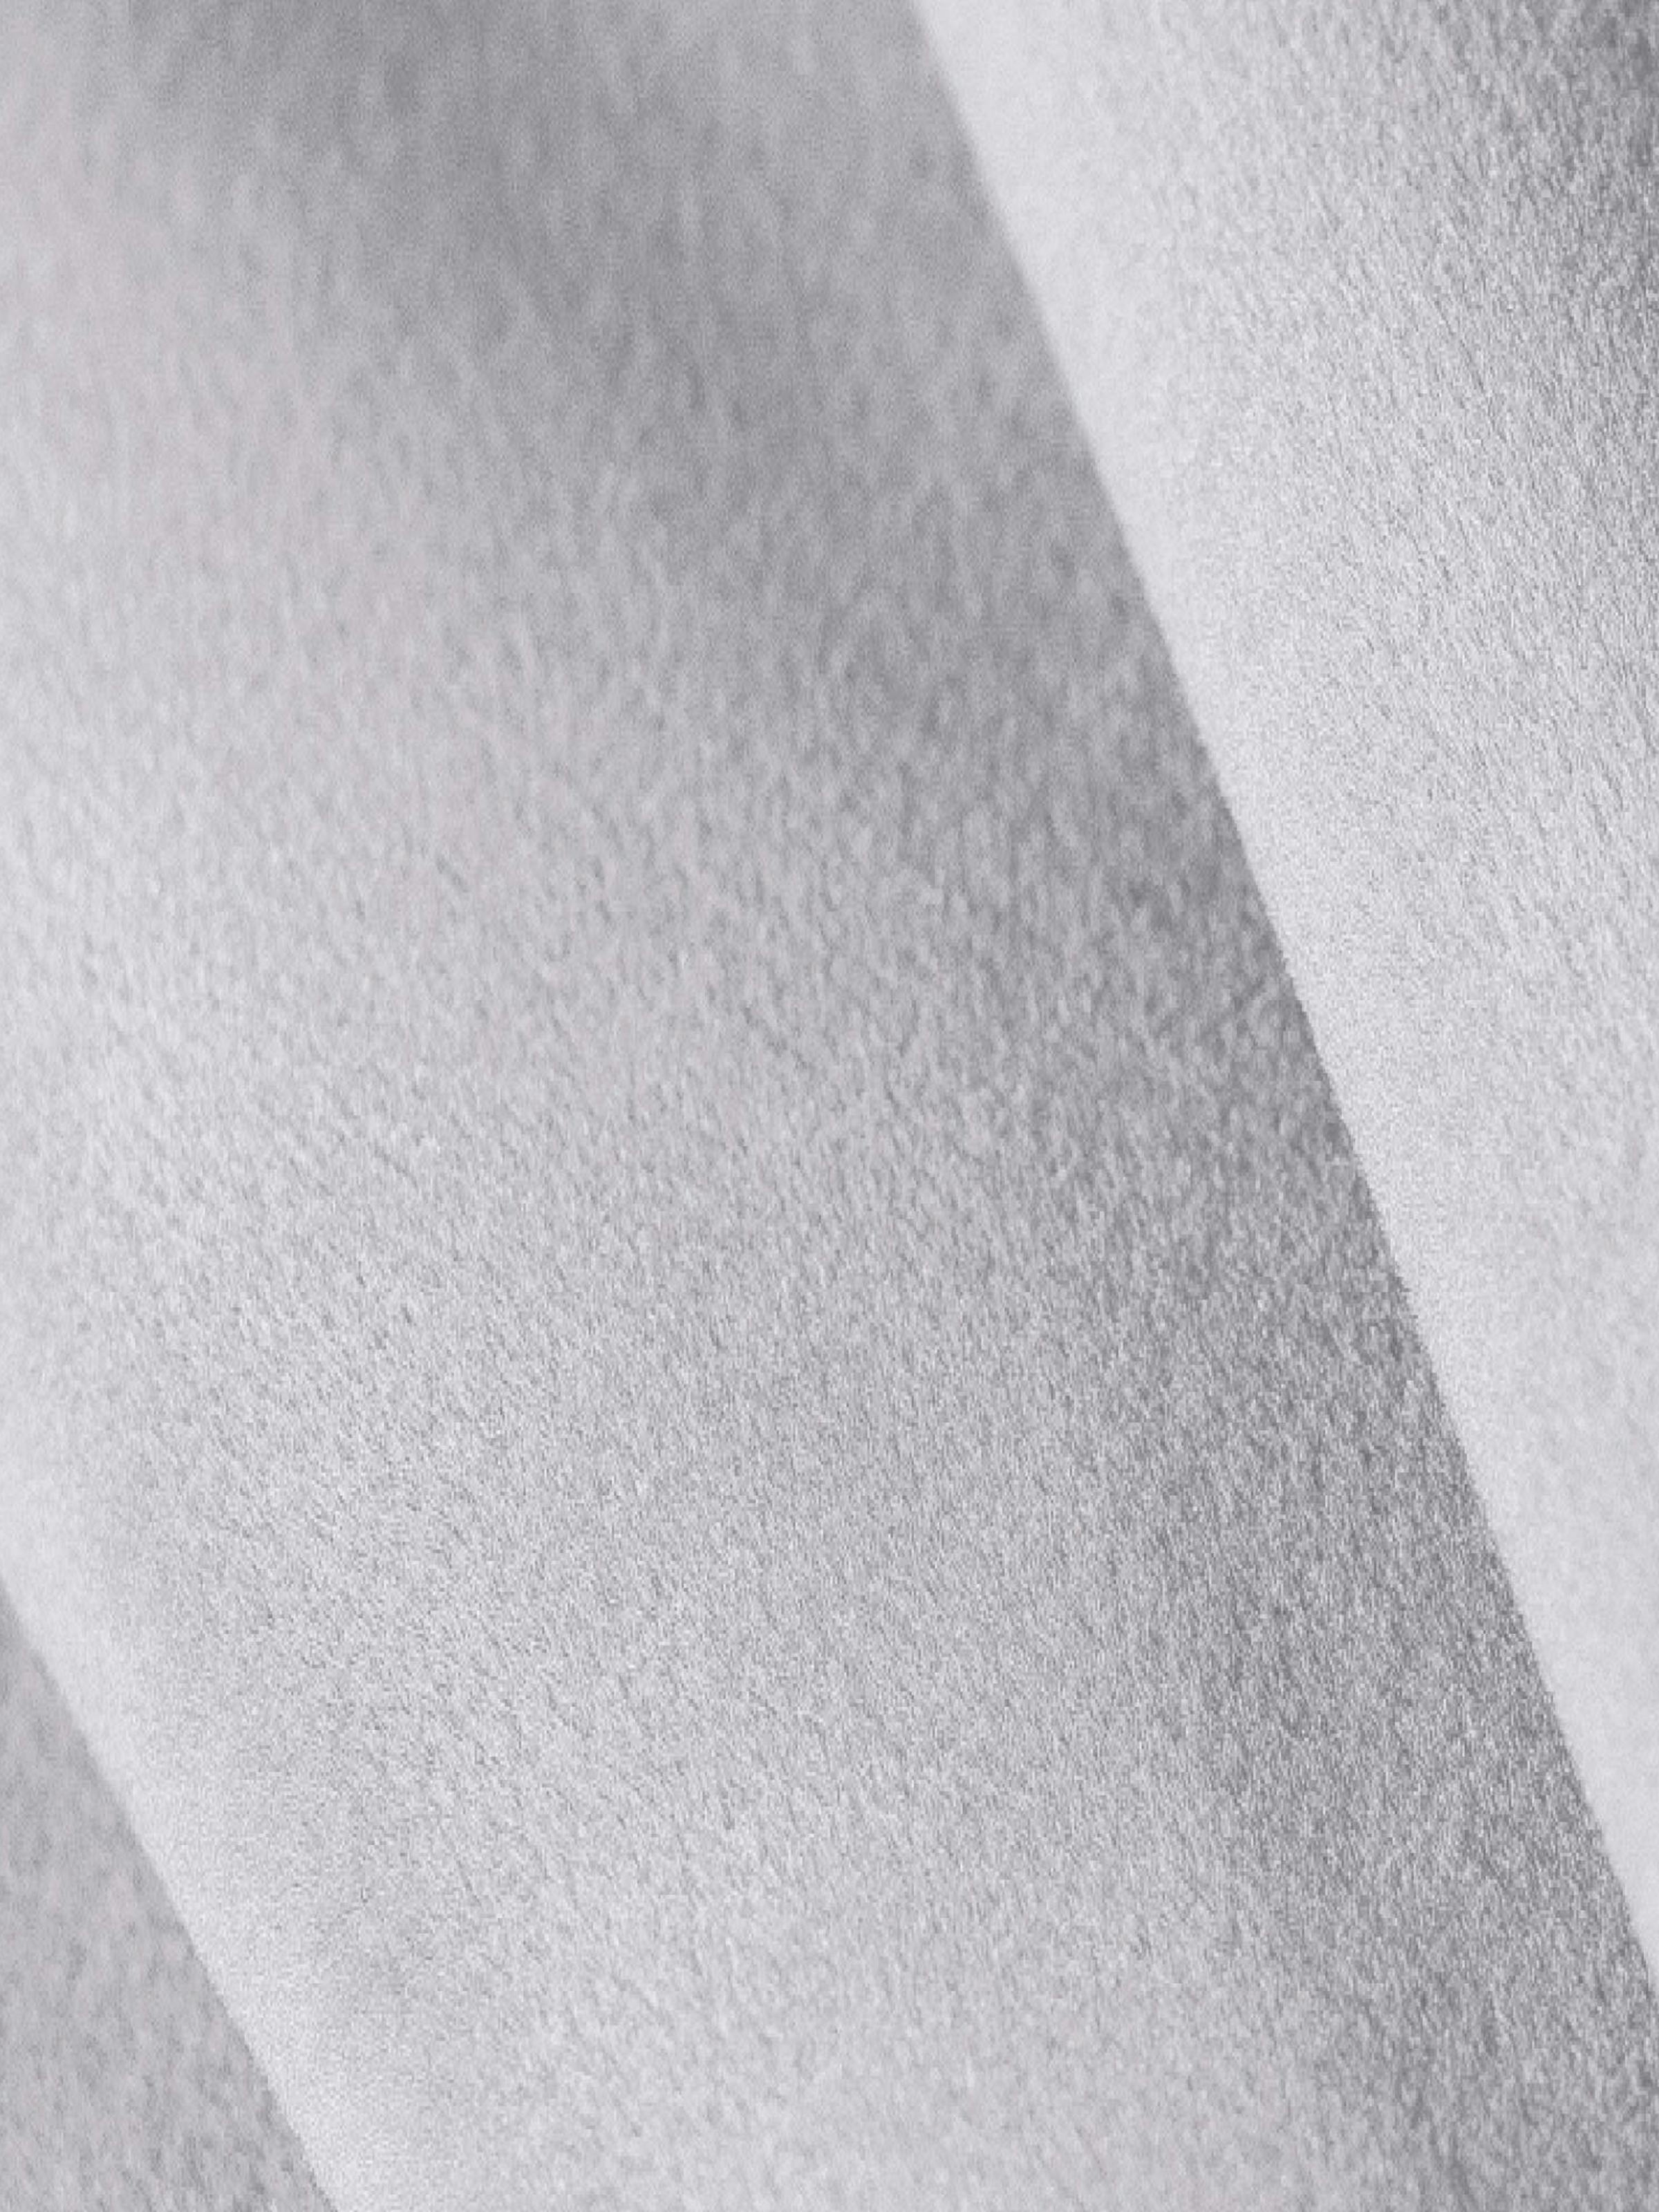 white-sofa-fabric